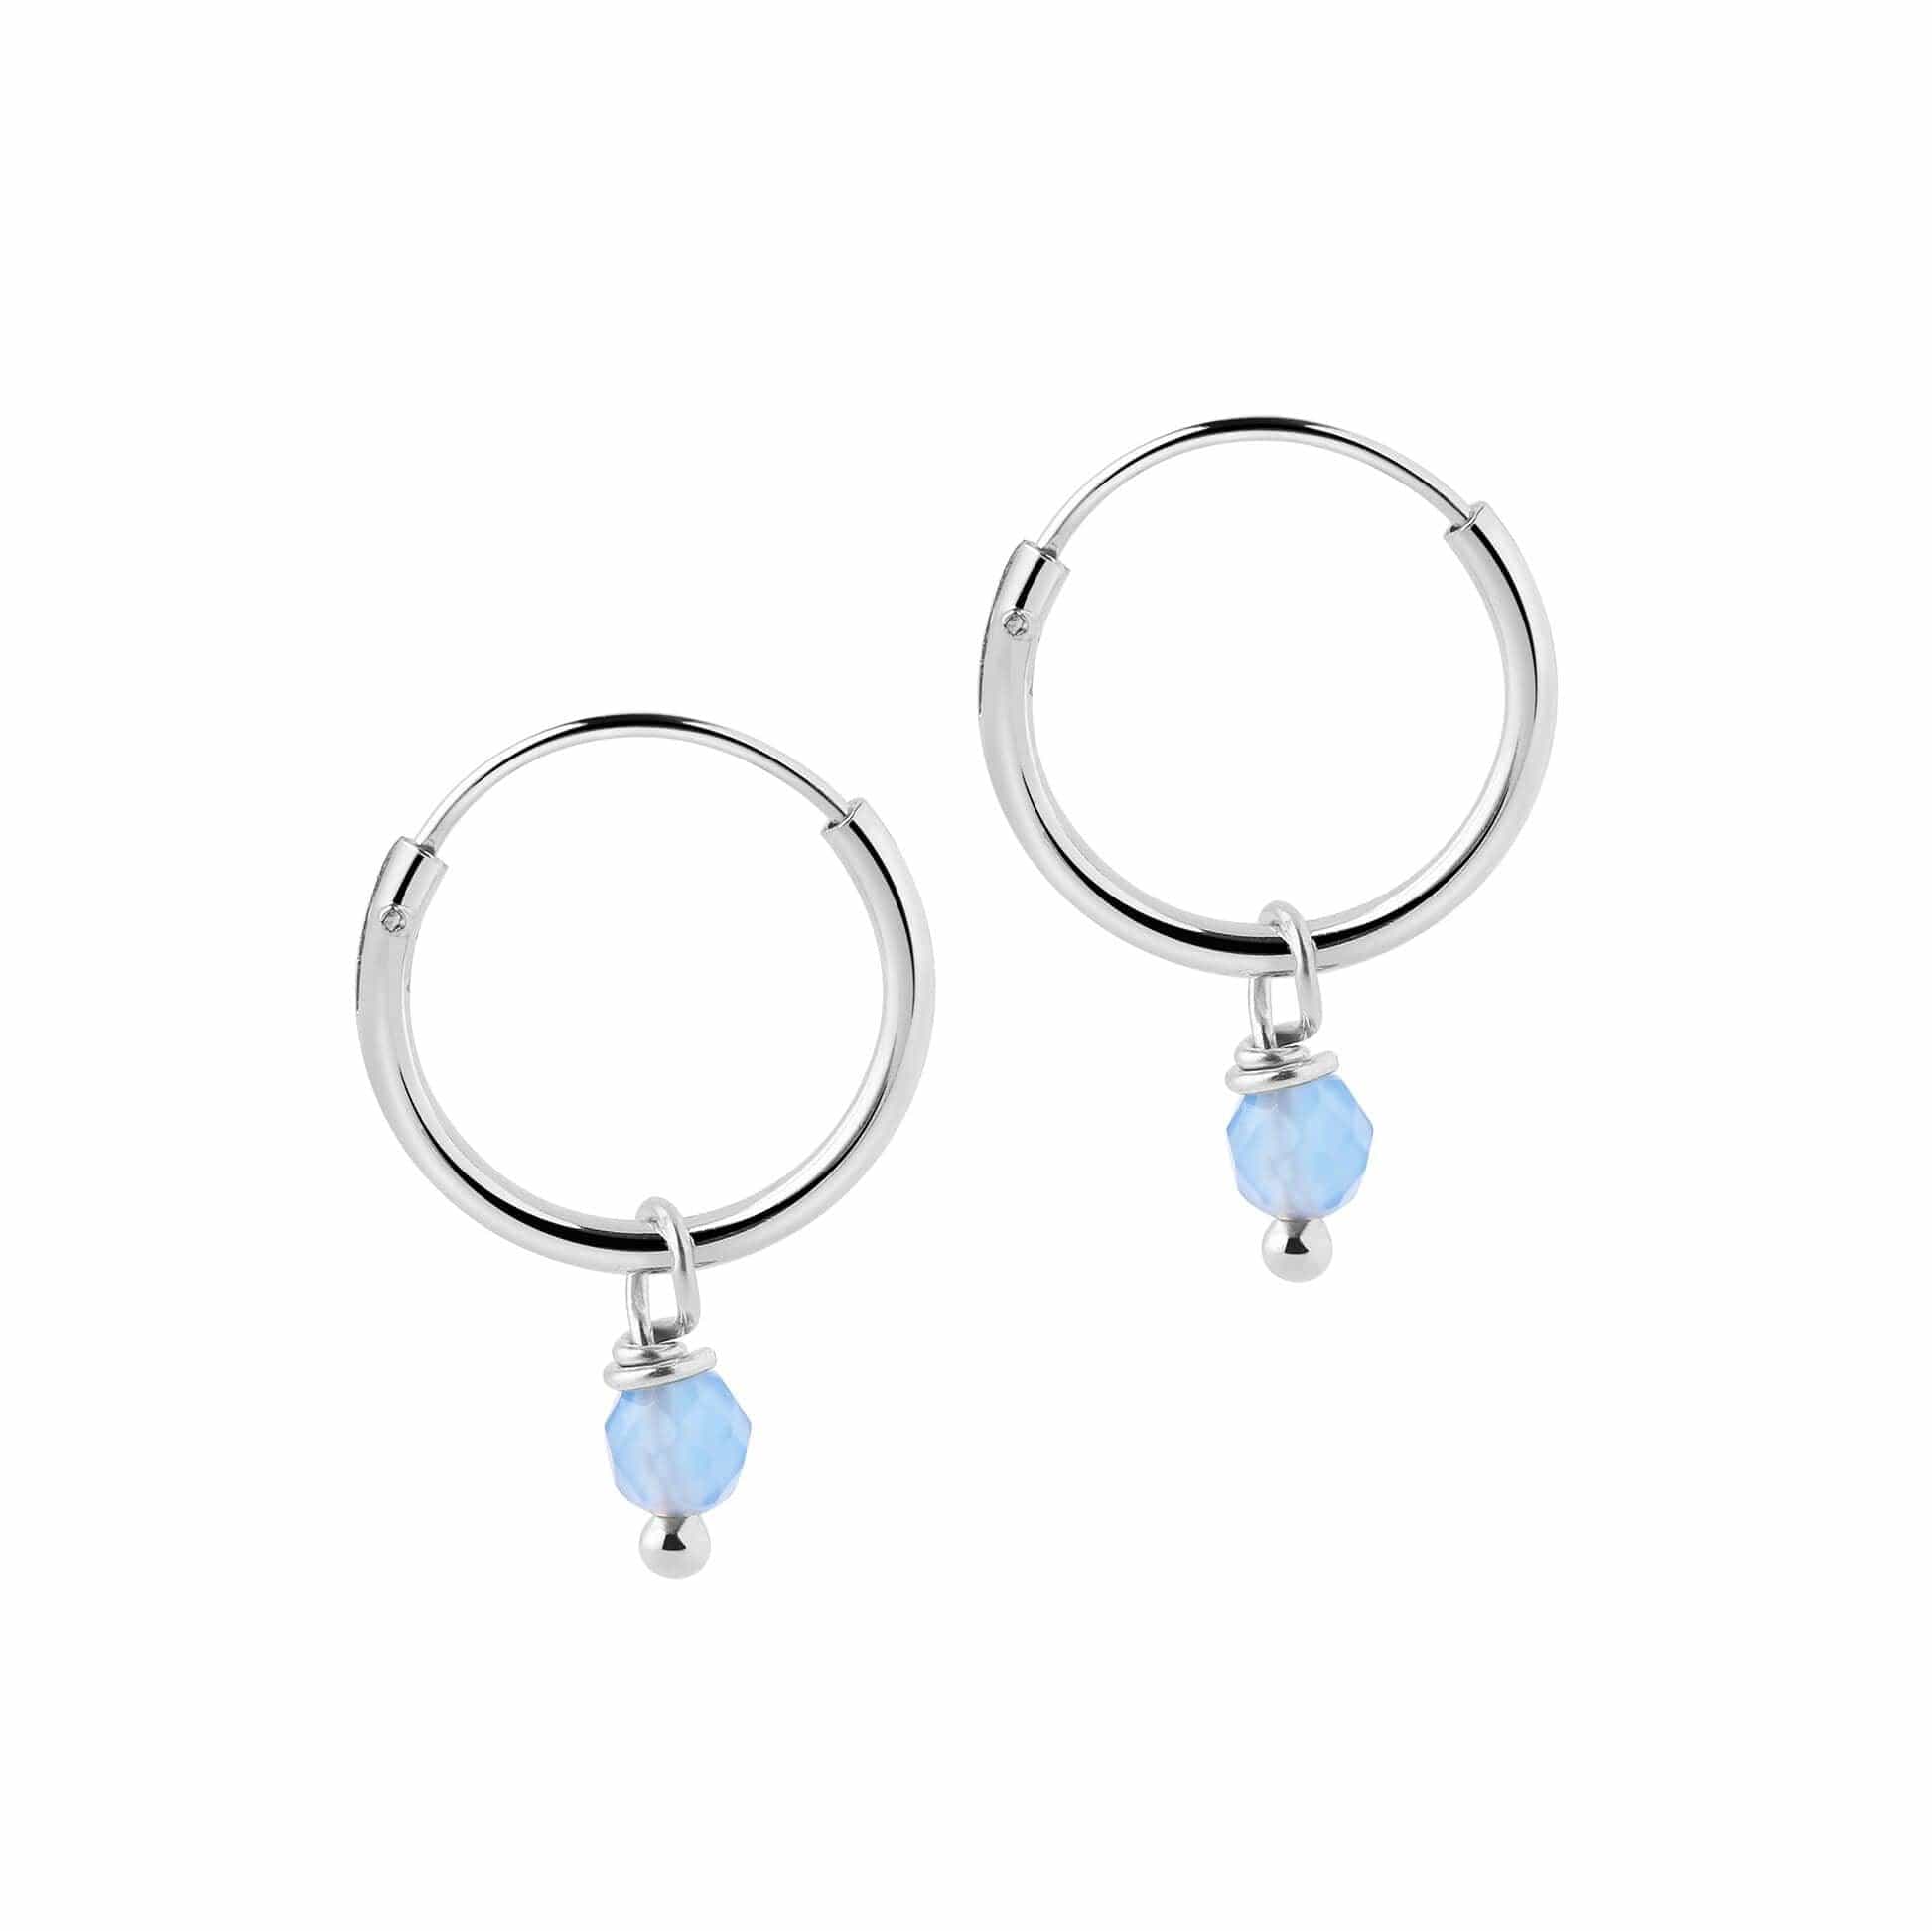 12mm silver Hoop Earrings with Blue Stone